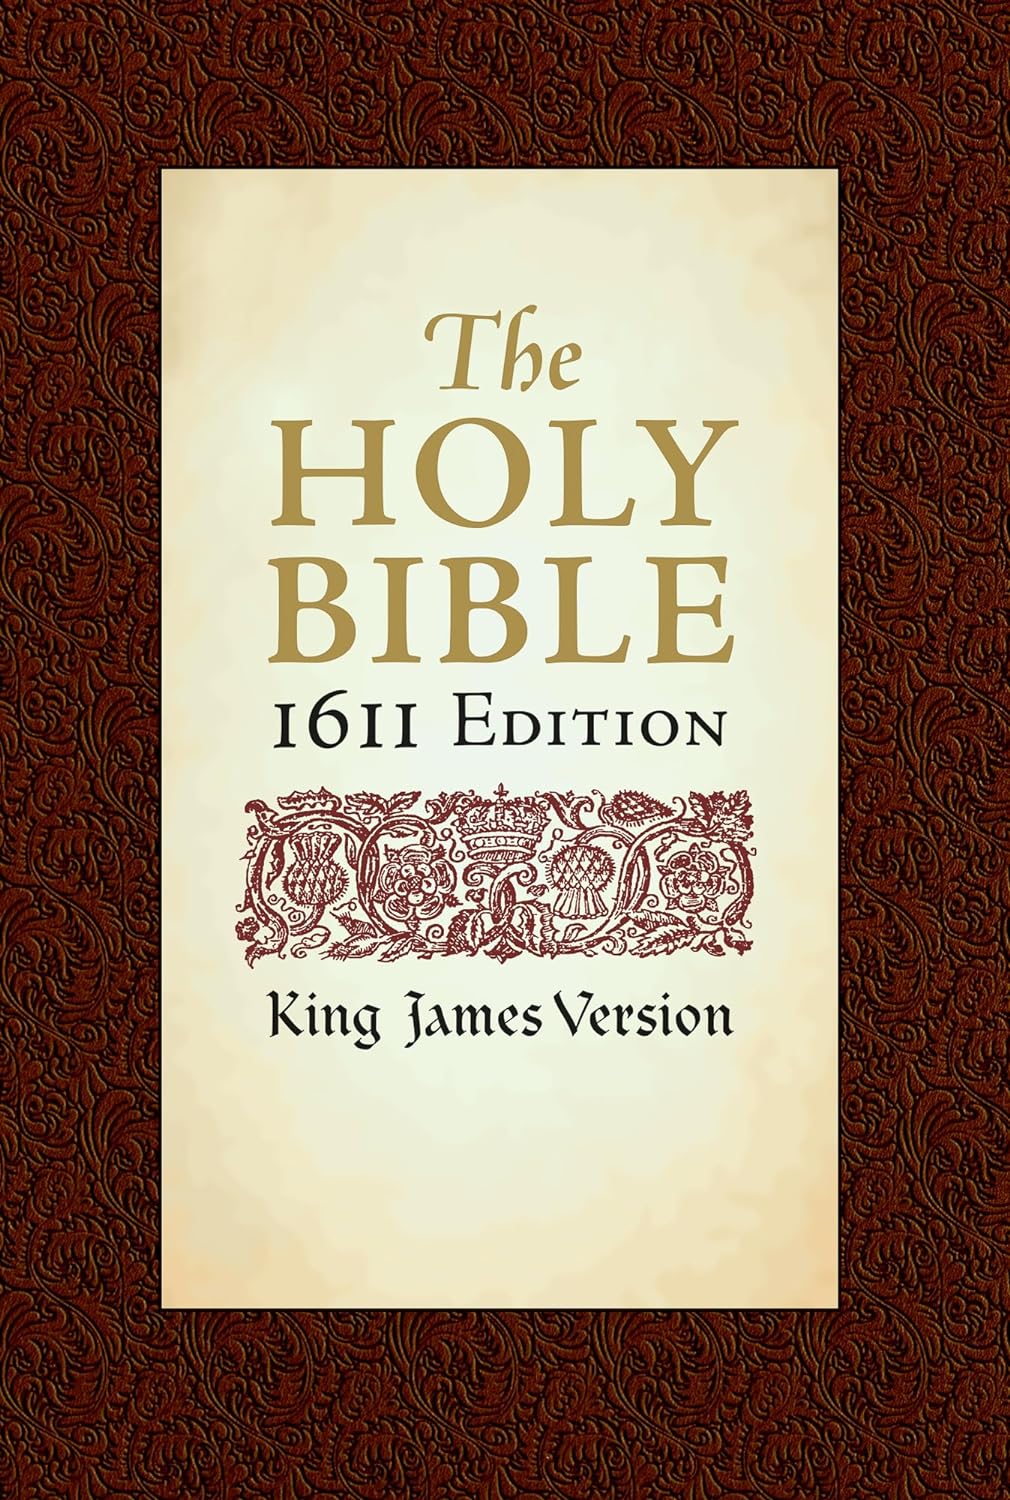 KJV Bible - 1611 Edition Hardcover